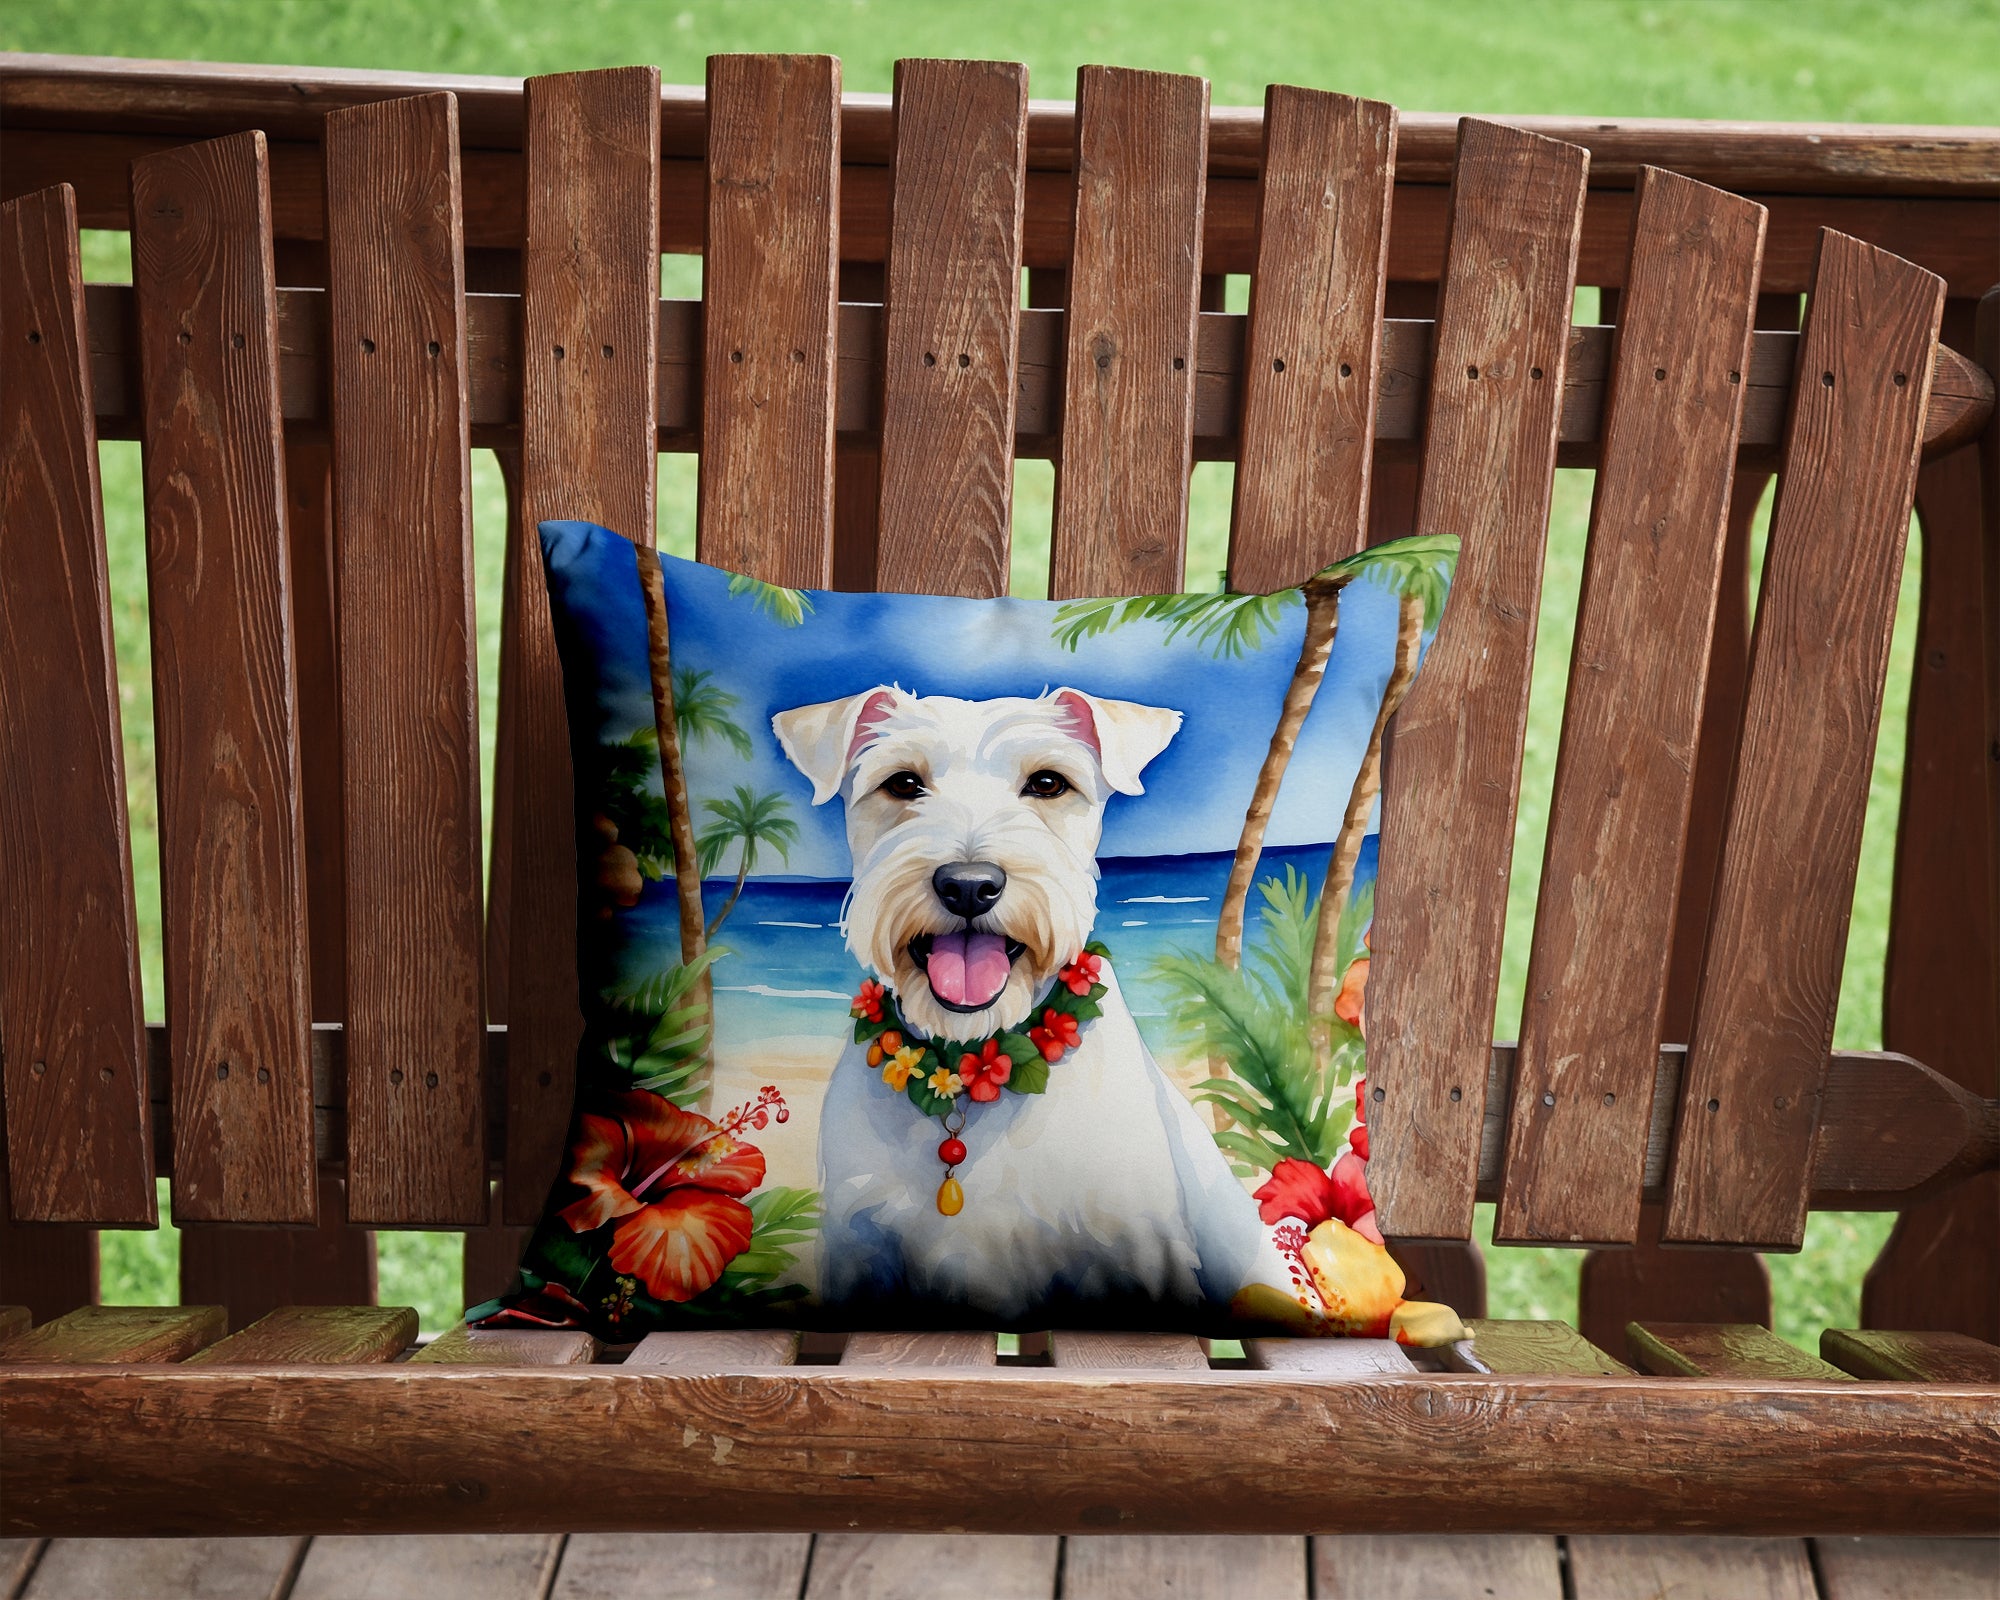 Buy this Sealyham Terrier Luau Throw Pillow